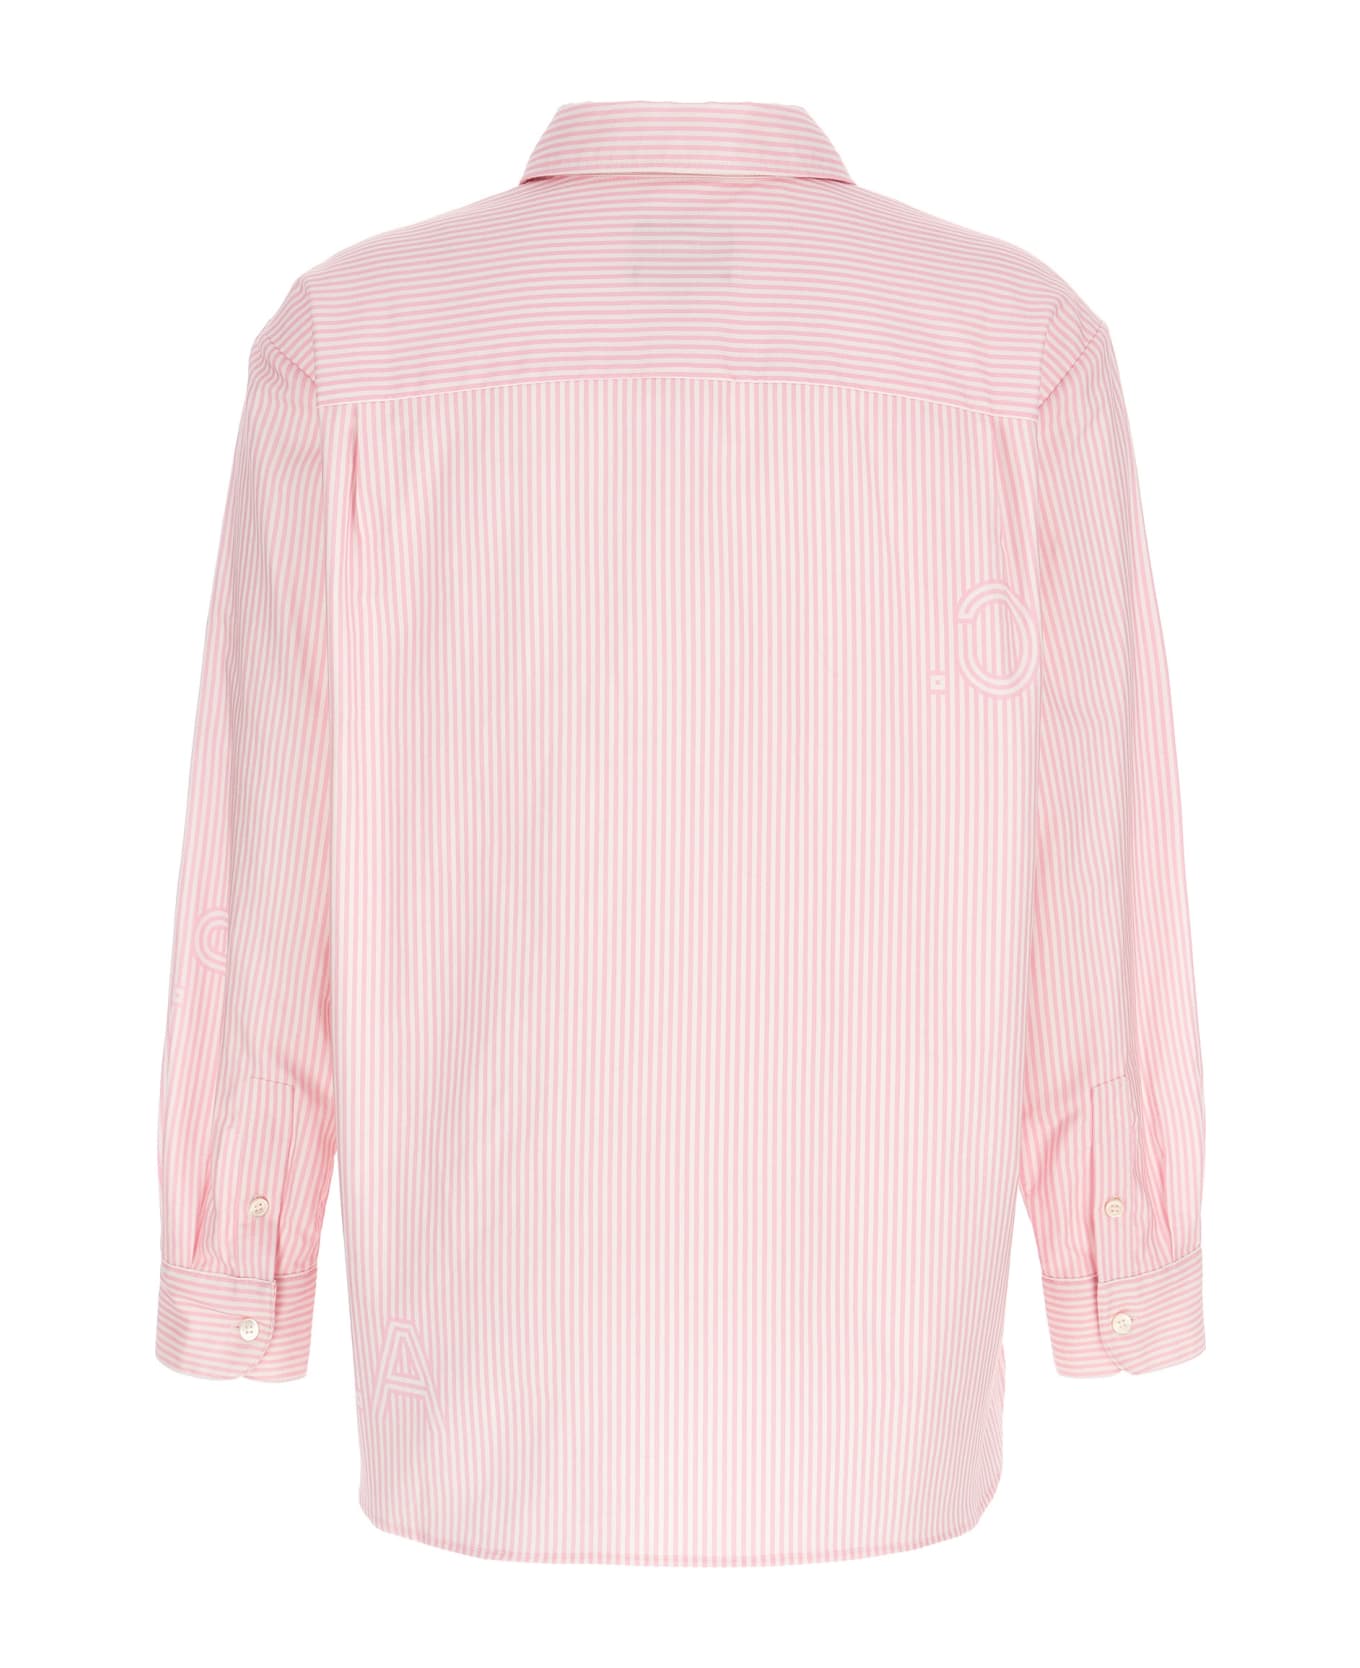 A.P.C. Sela Shirt - Faa Pink